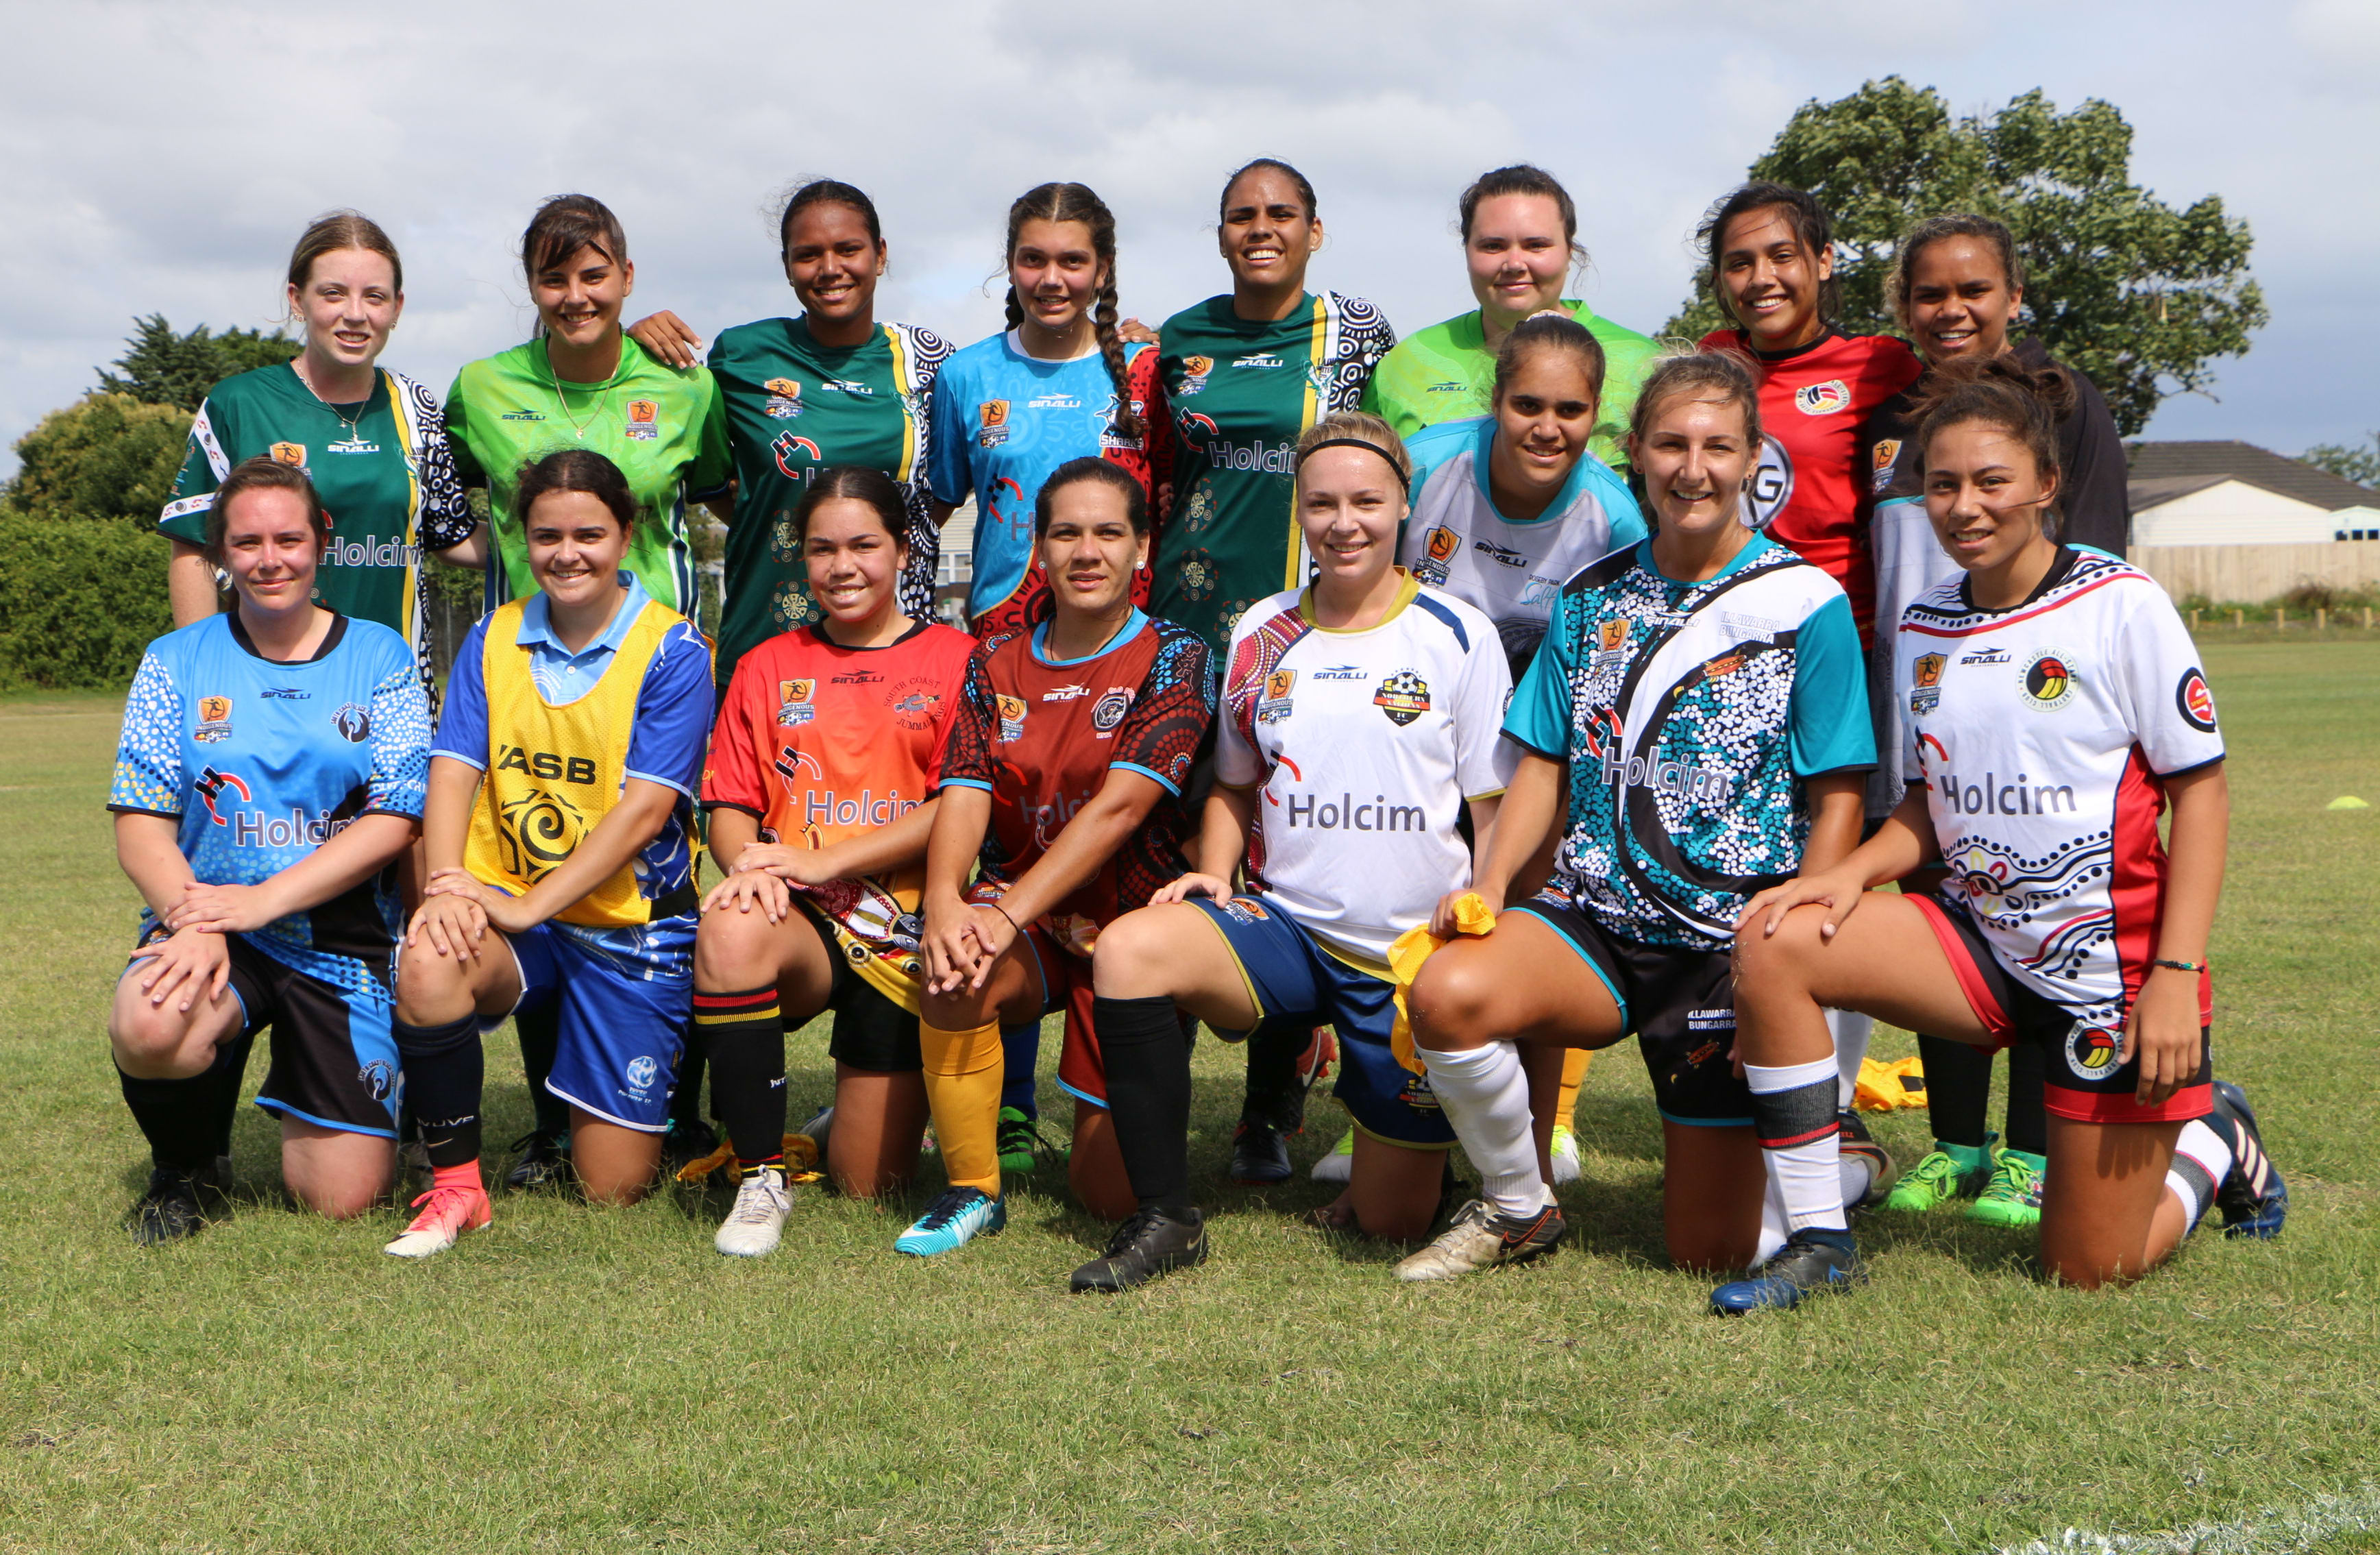 The Māori Football Te Ikaroa team play the Australian First Nations Mariya team at the weekend.